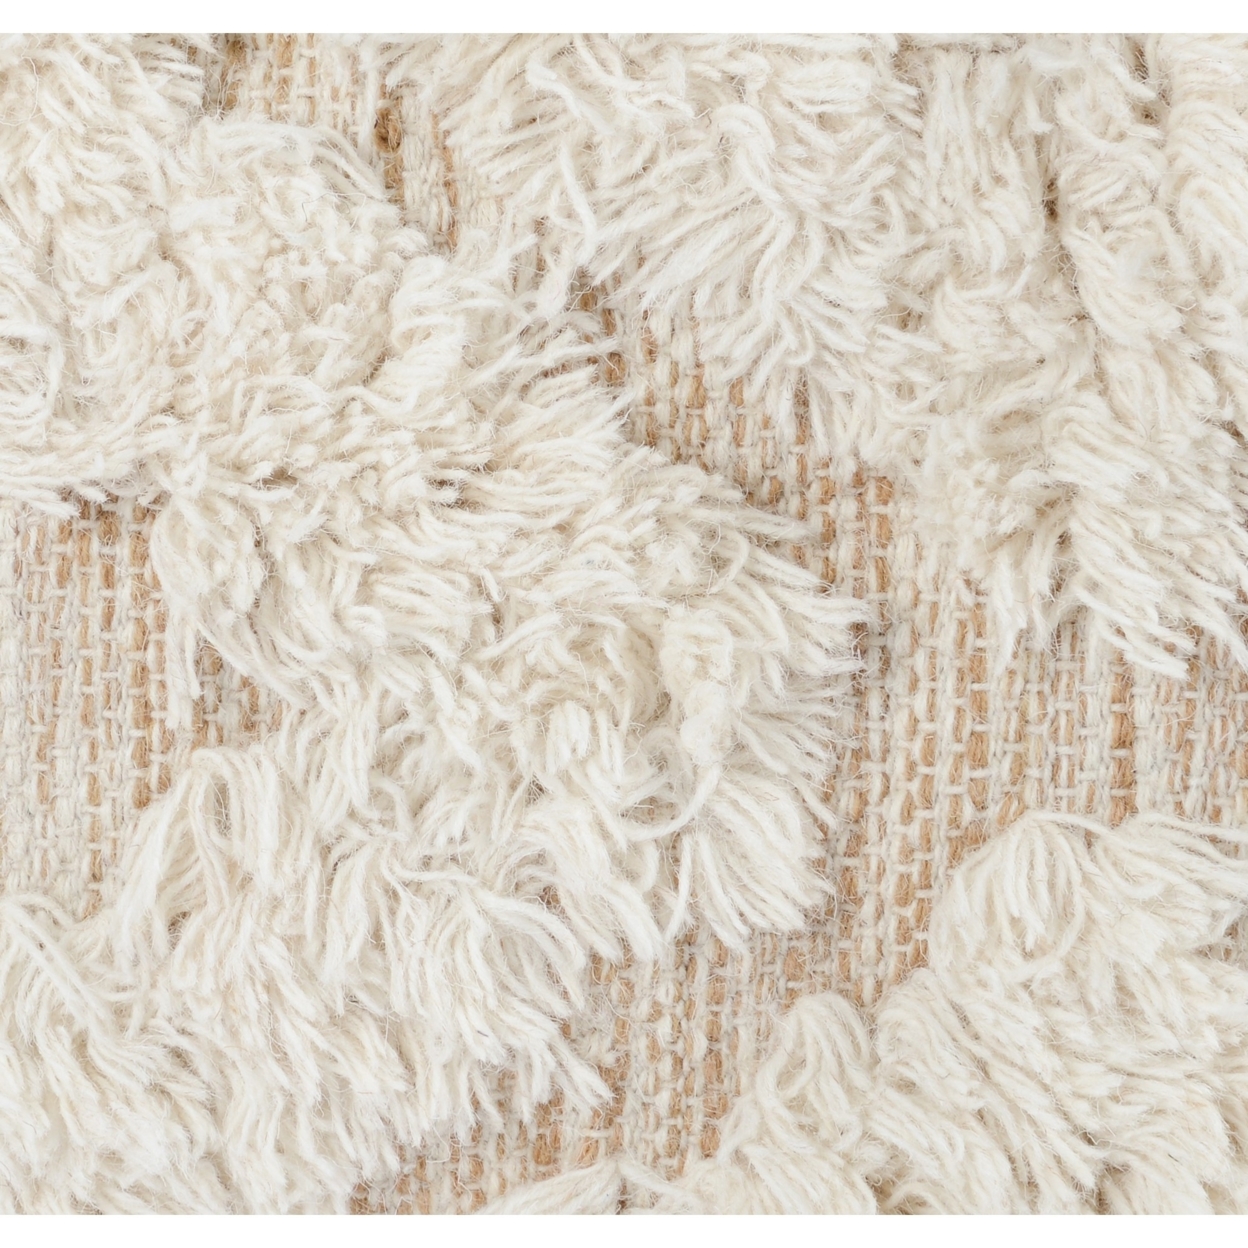 24 Inch Classic Wool Sqaure Pouf, Wide Design, Handwoven Texture, Beige, Saltoro Sherpi